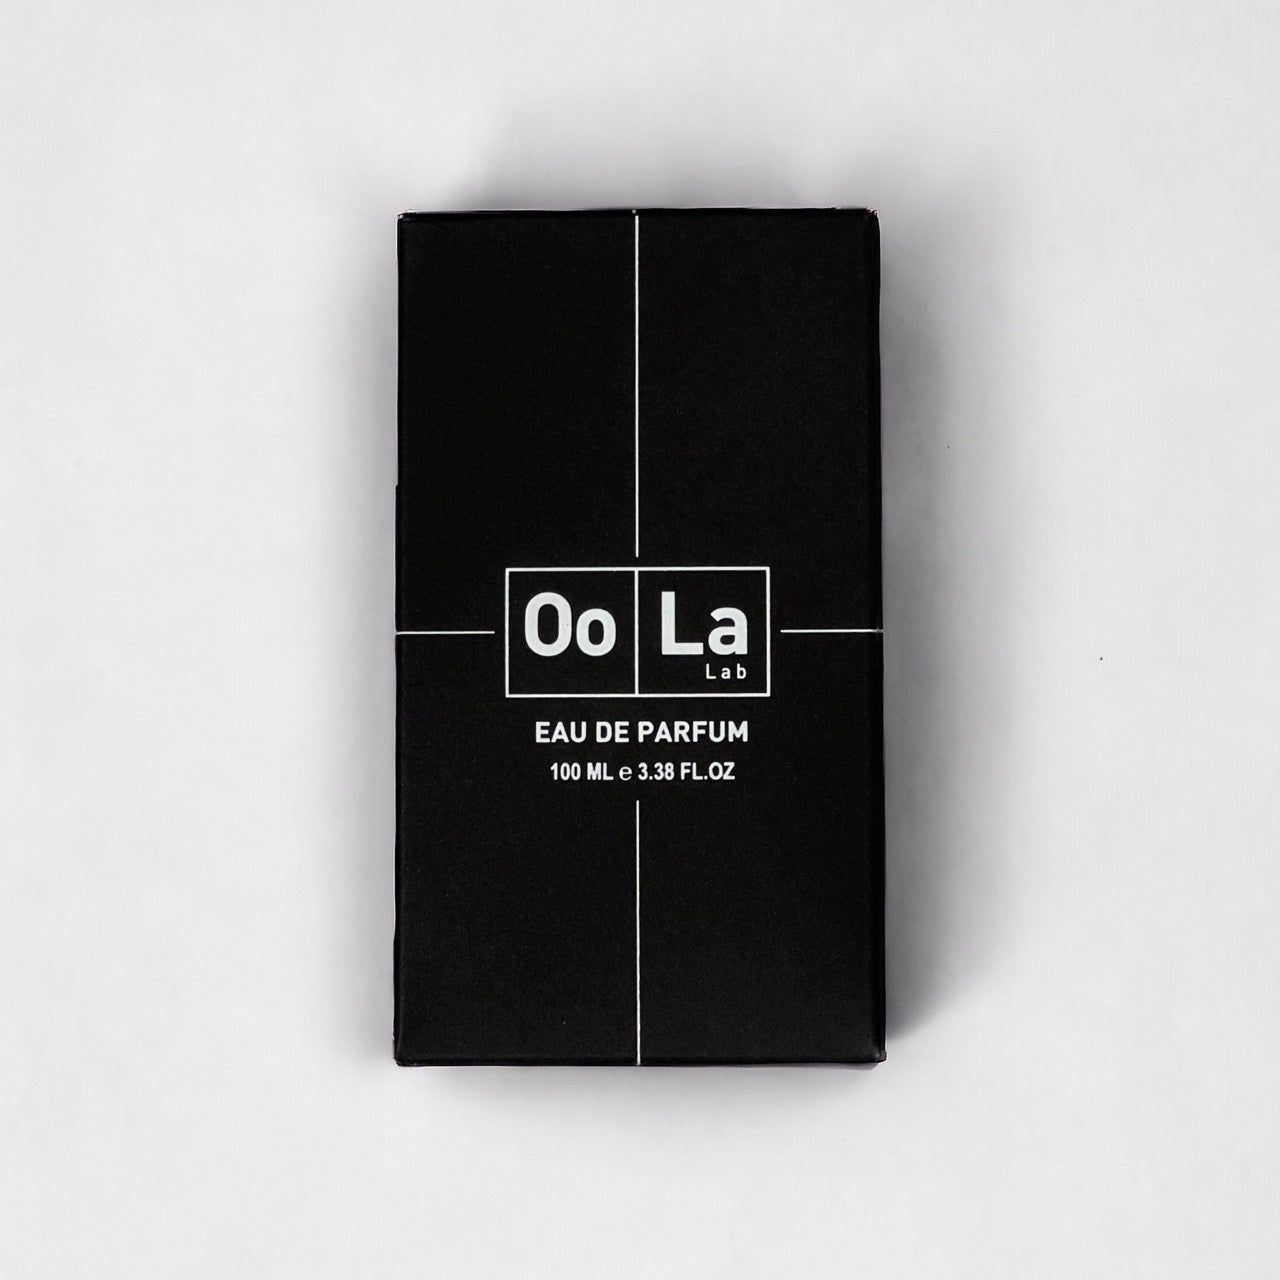 SKIN Eau de Parfum (100ml) - Oo La Lab